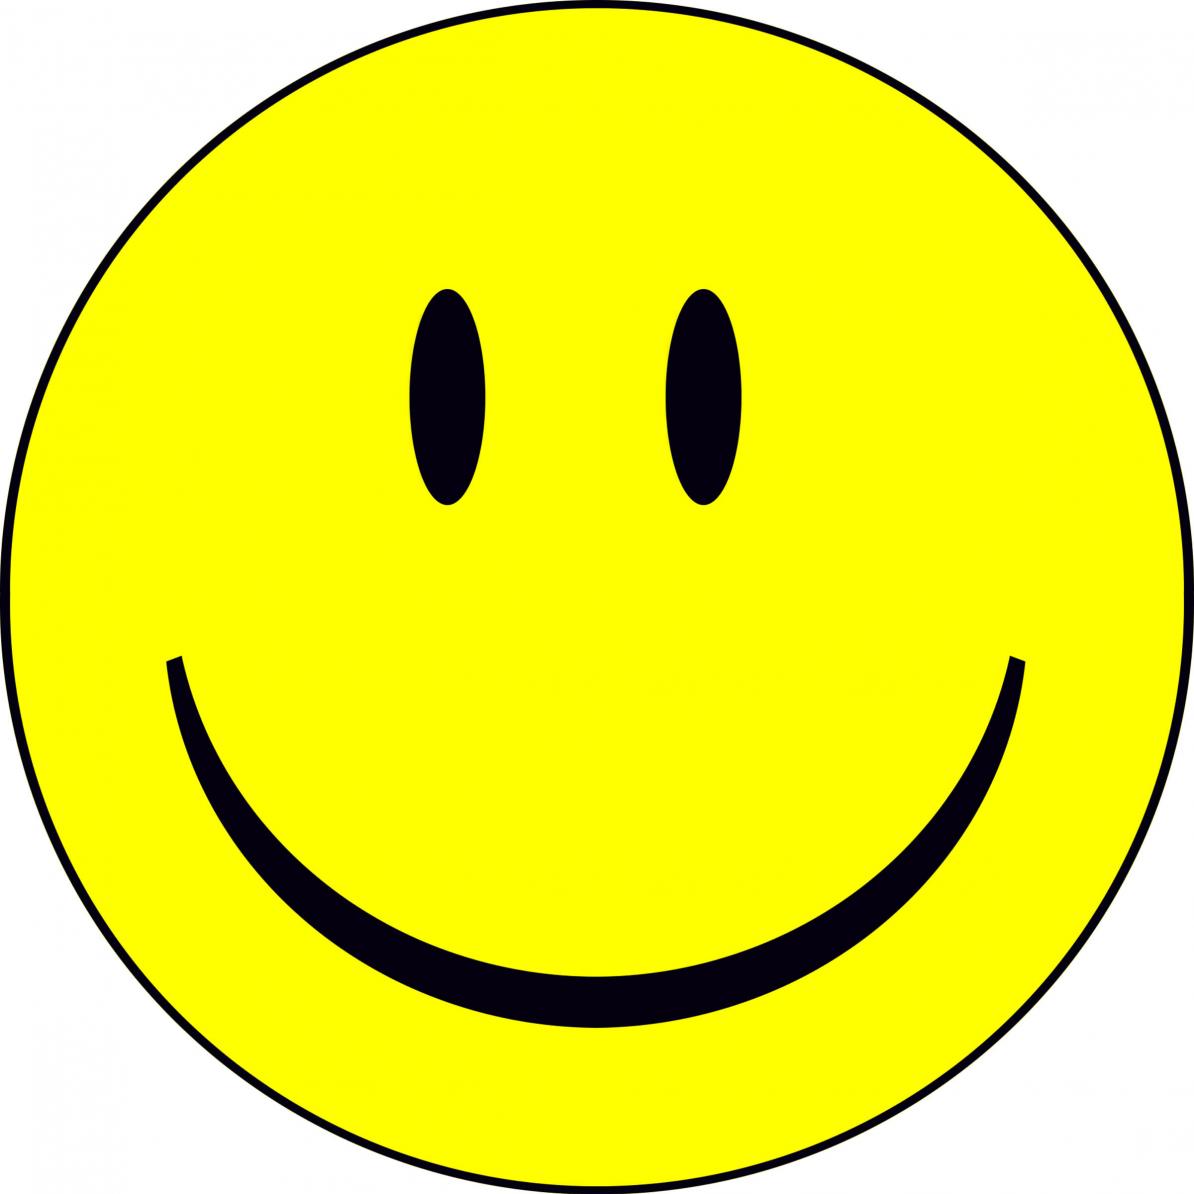 Free Smiley Face Behavior Chart